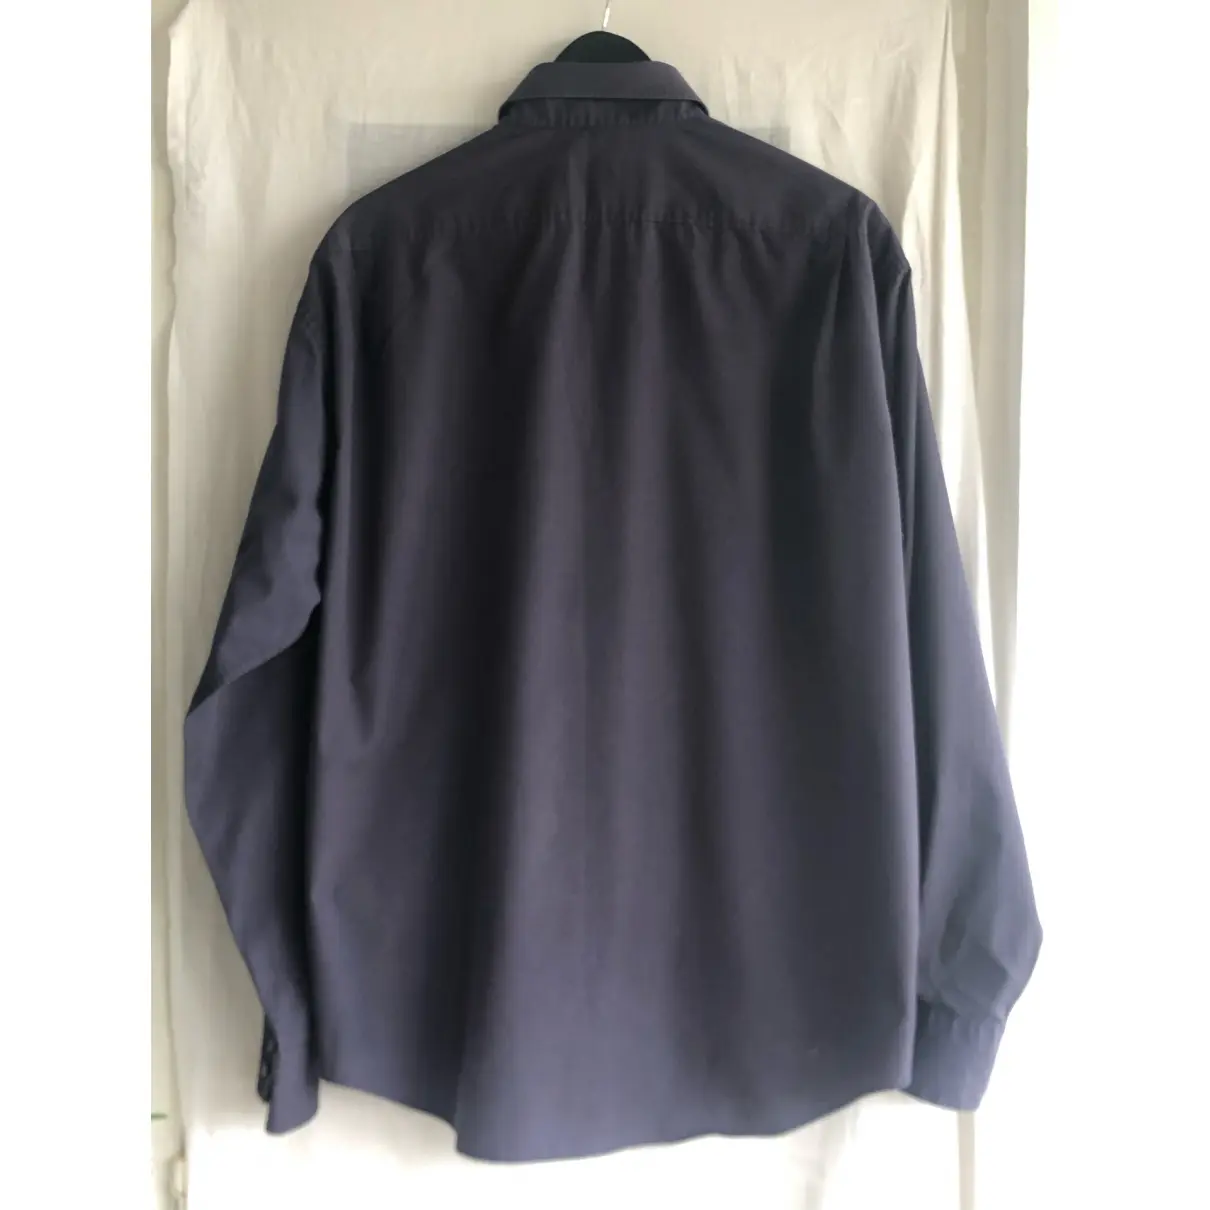 Buy Yves Saint Laurent Shirt online - Vintage